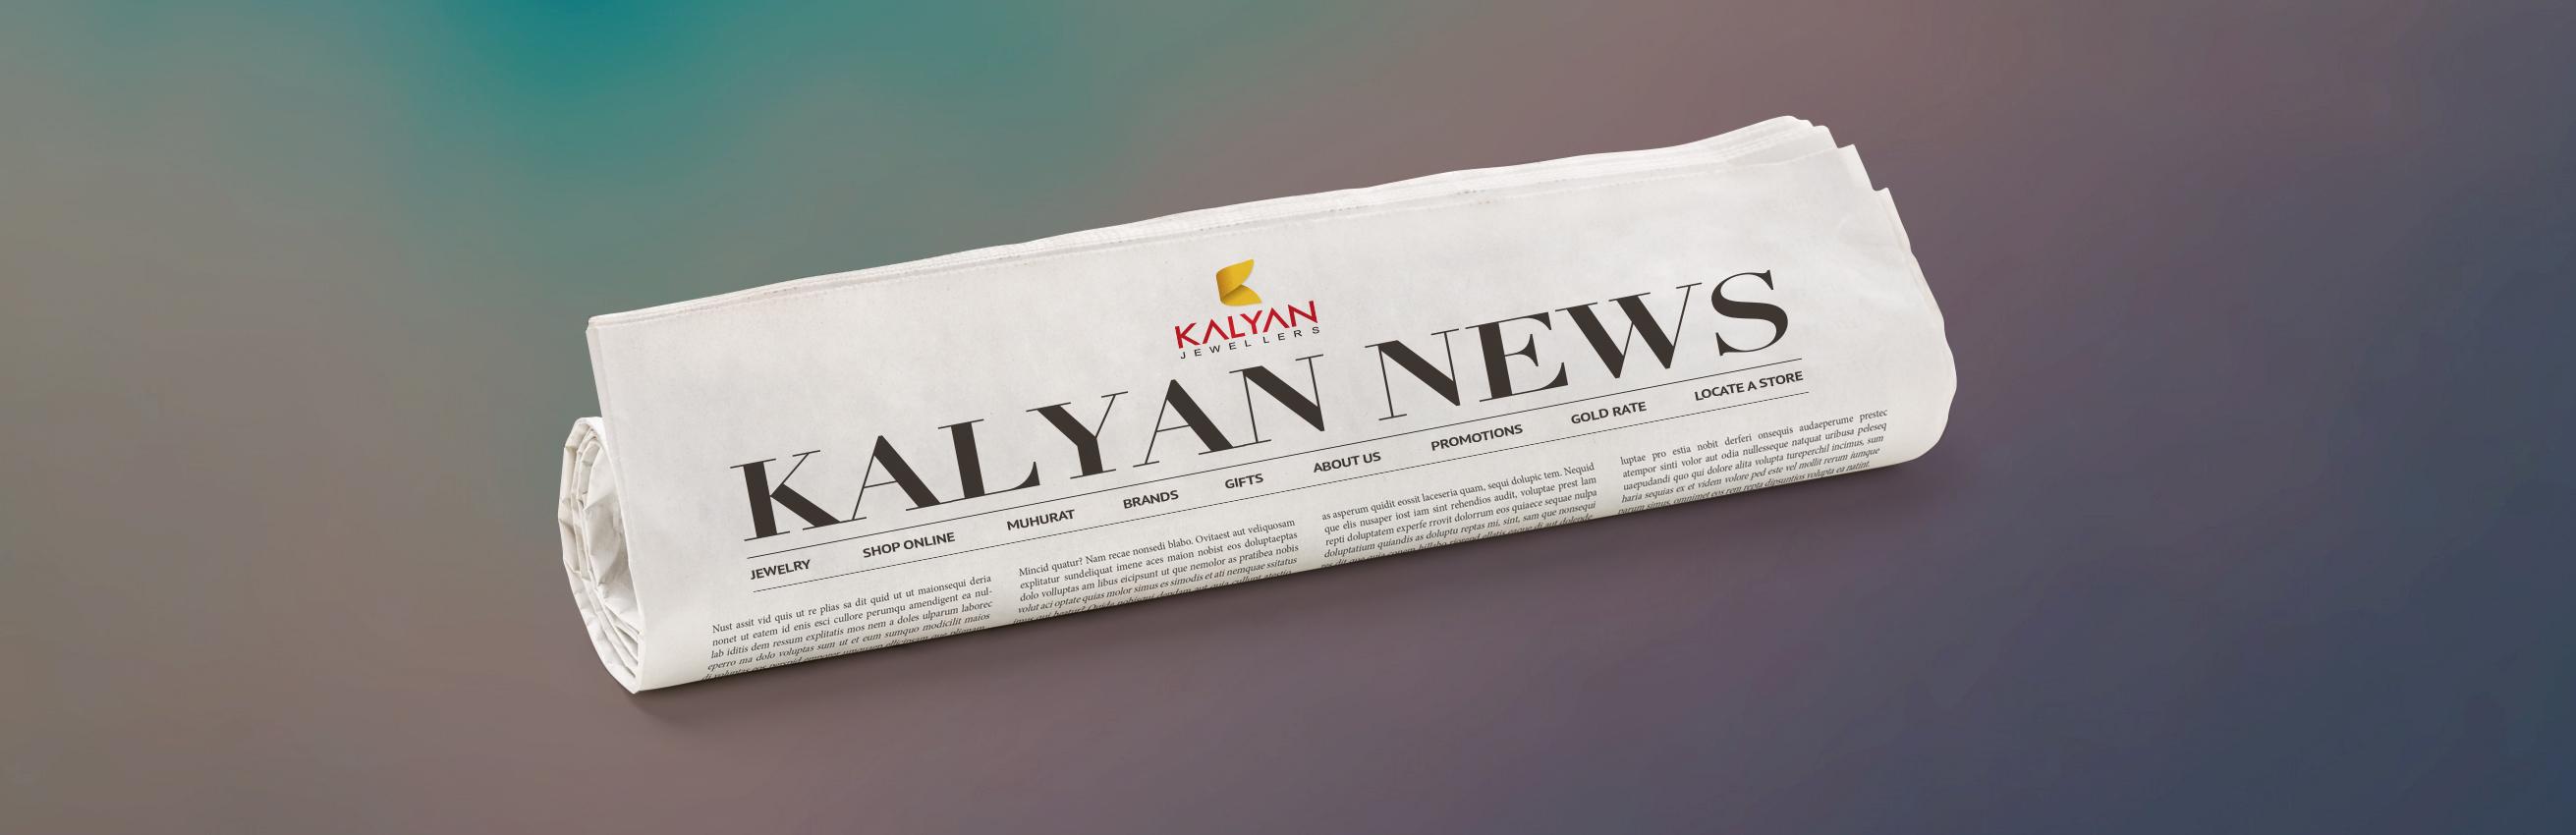 Jewelry kalyan jewellers Kalyan News